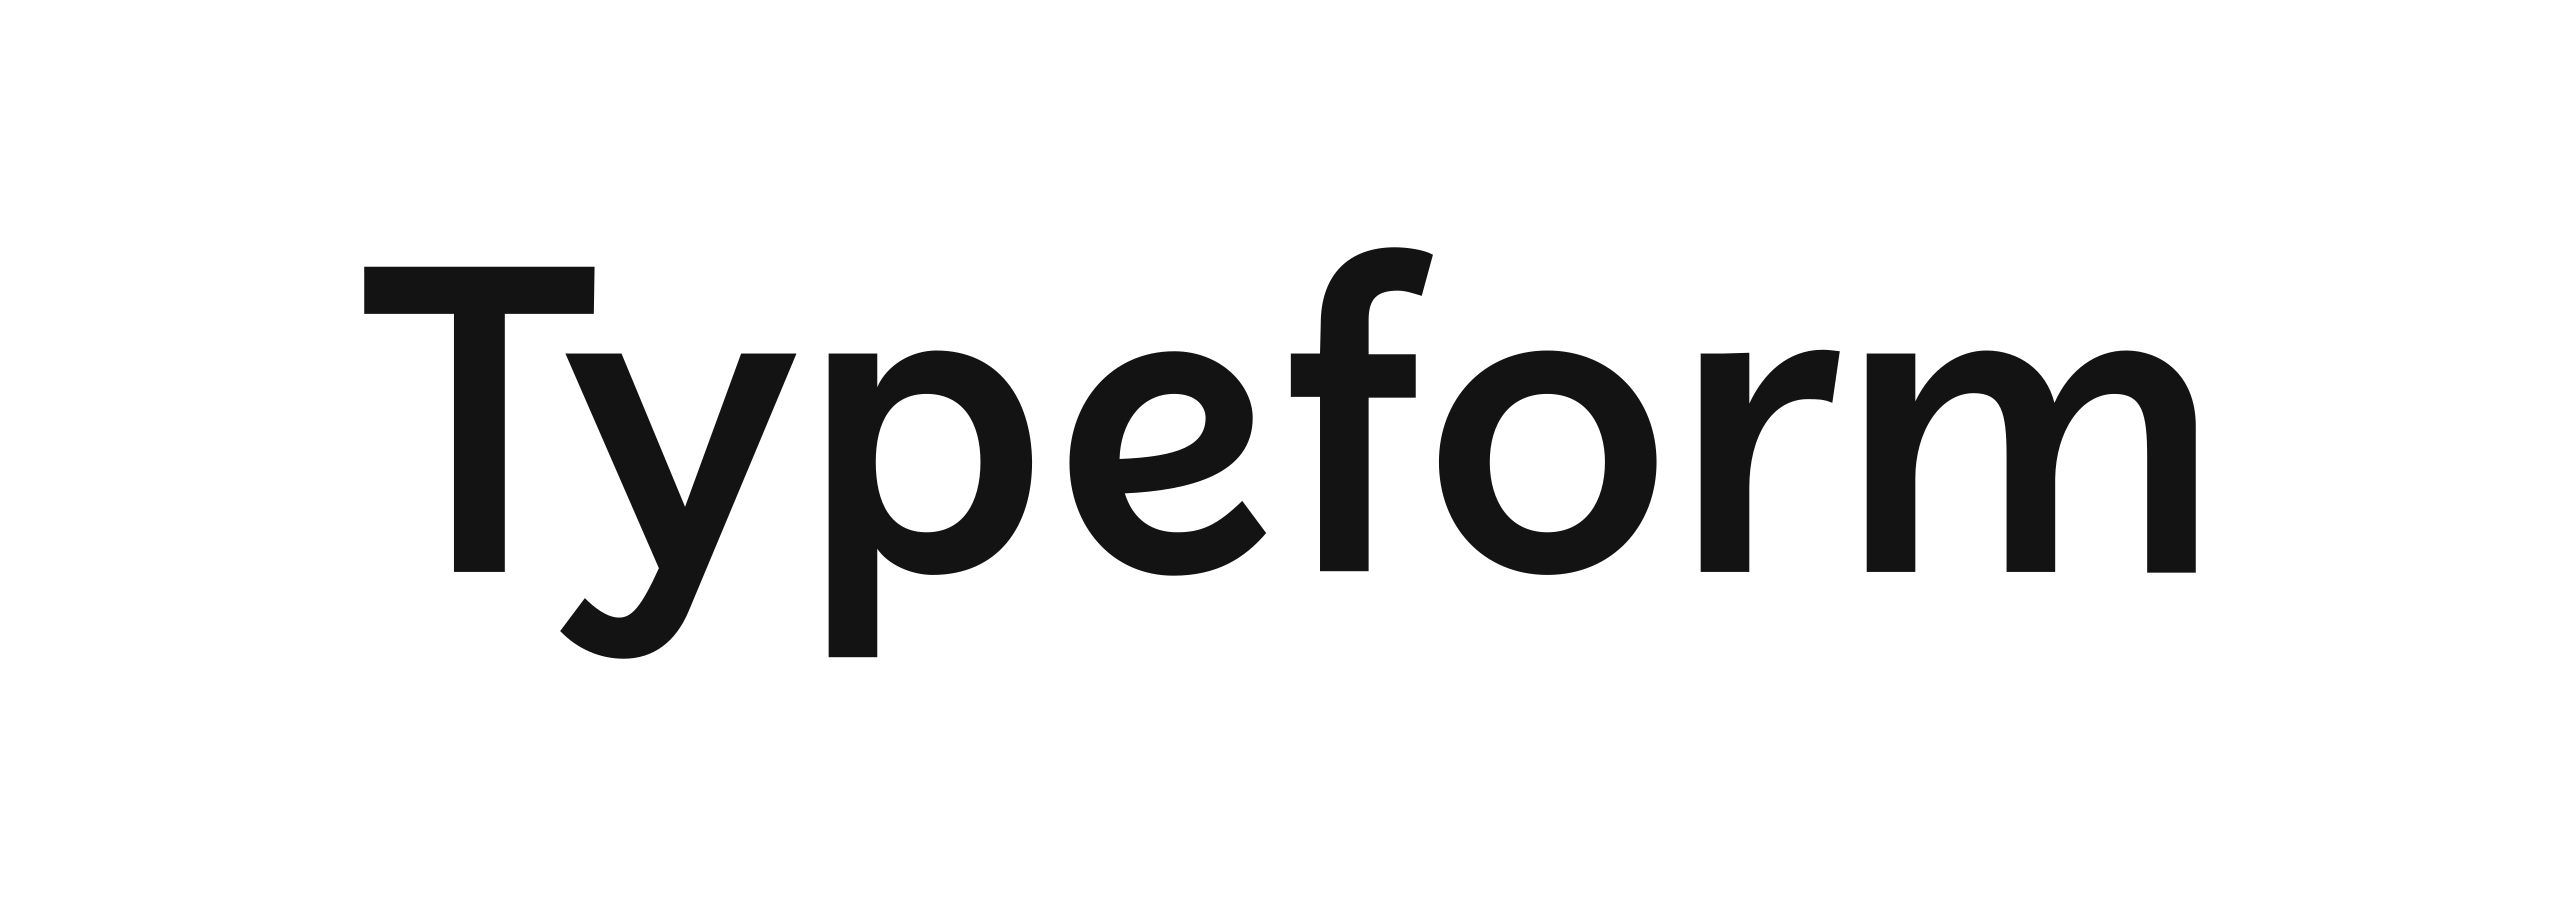 Typeform official logo